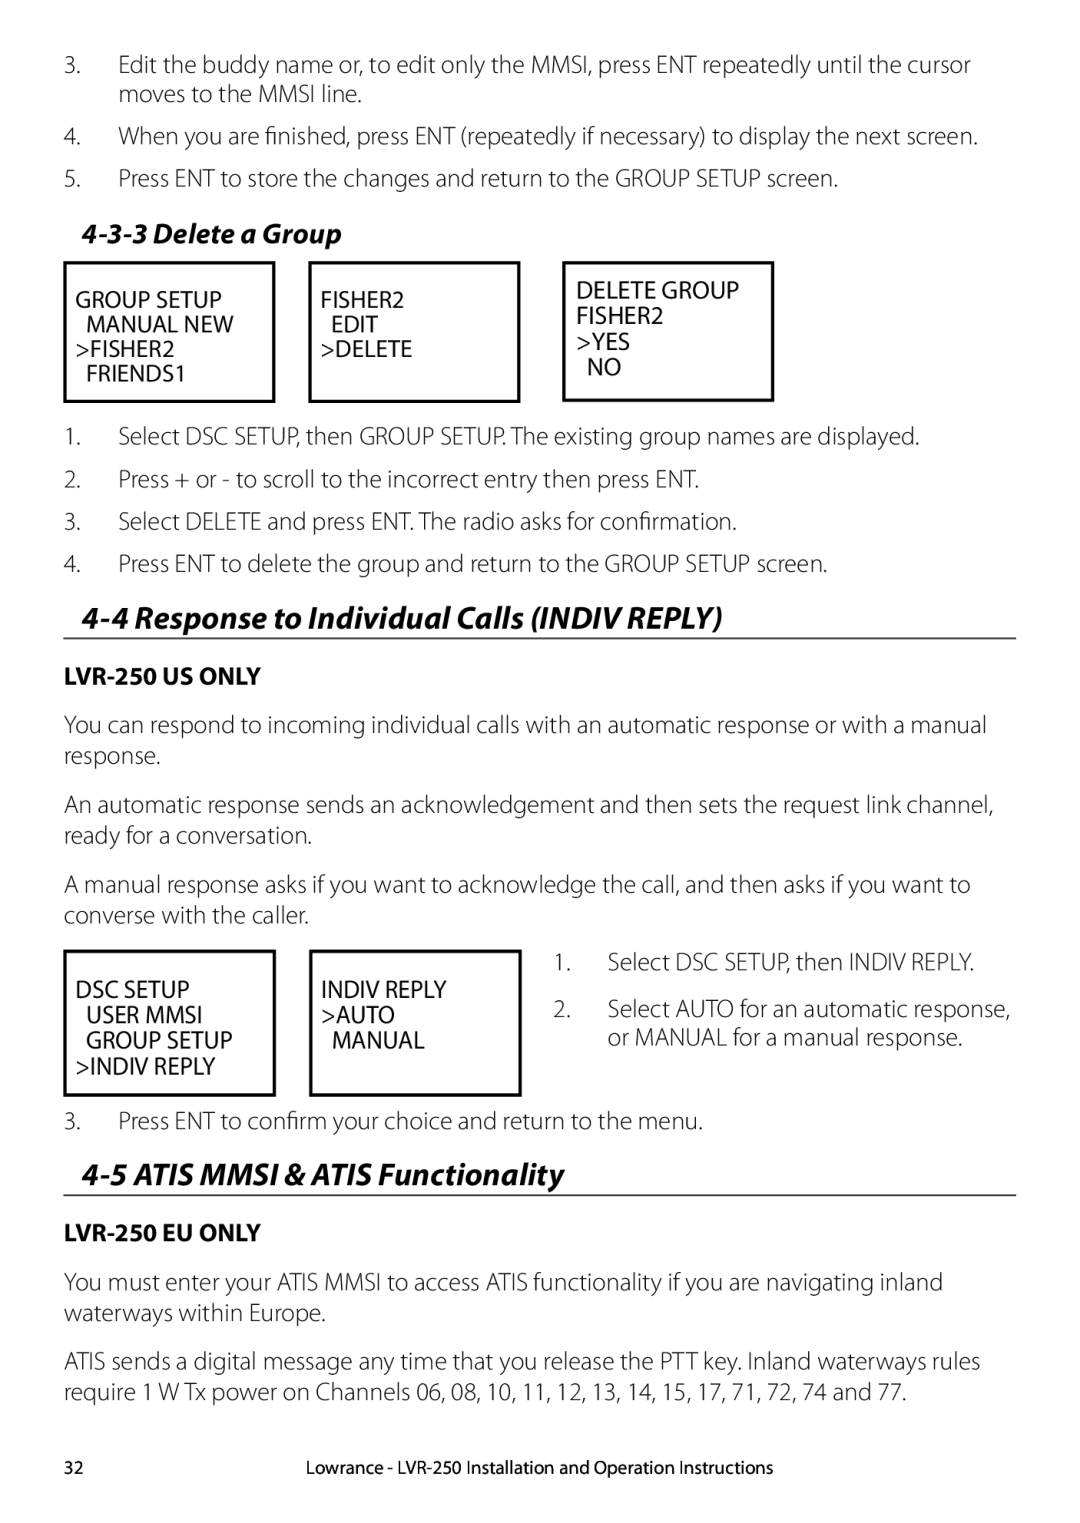 Lowrance electronic LVR-250 manual 4-4Response to Individual Calls INDIV REPLY, 4-5ATIS MMSI & ATIS Functionality 